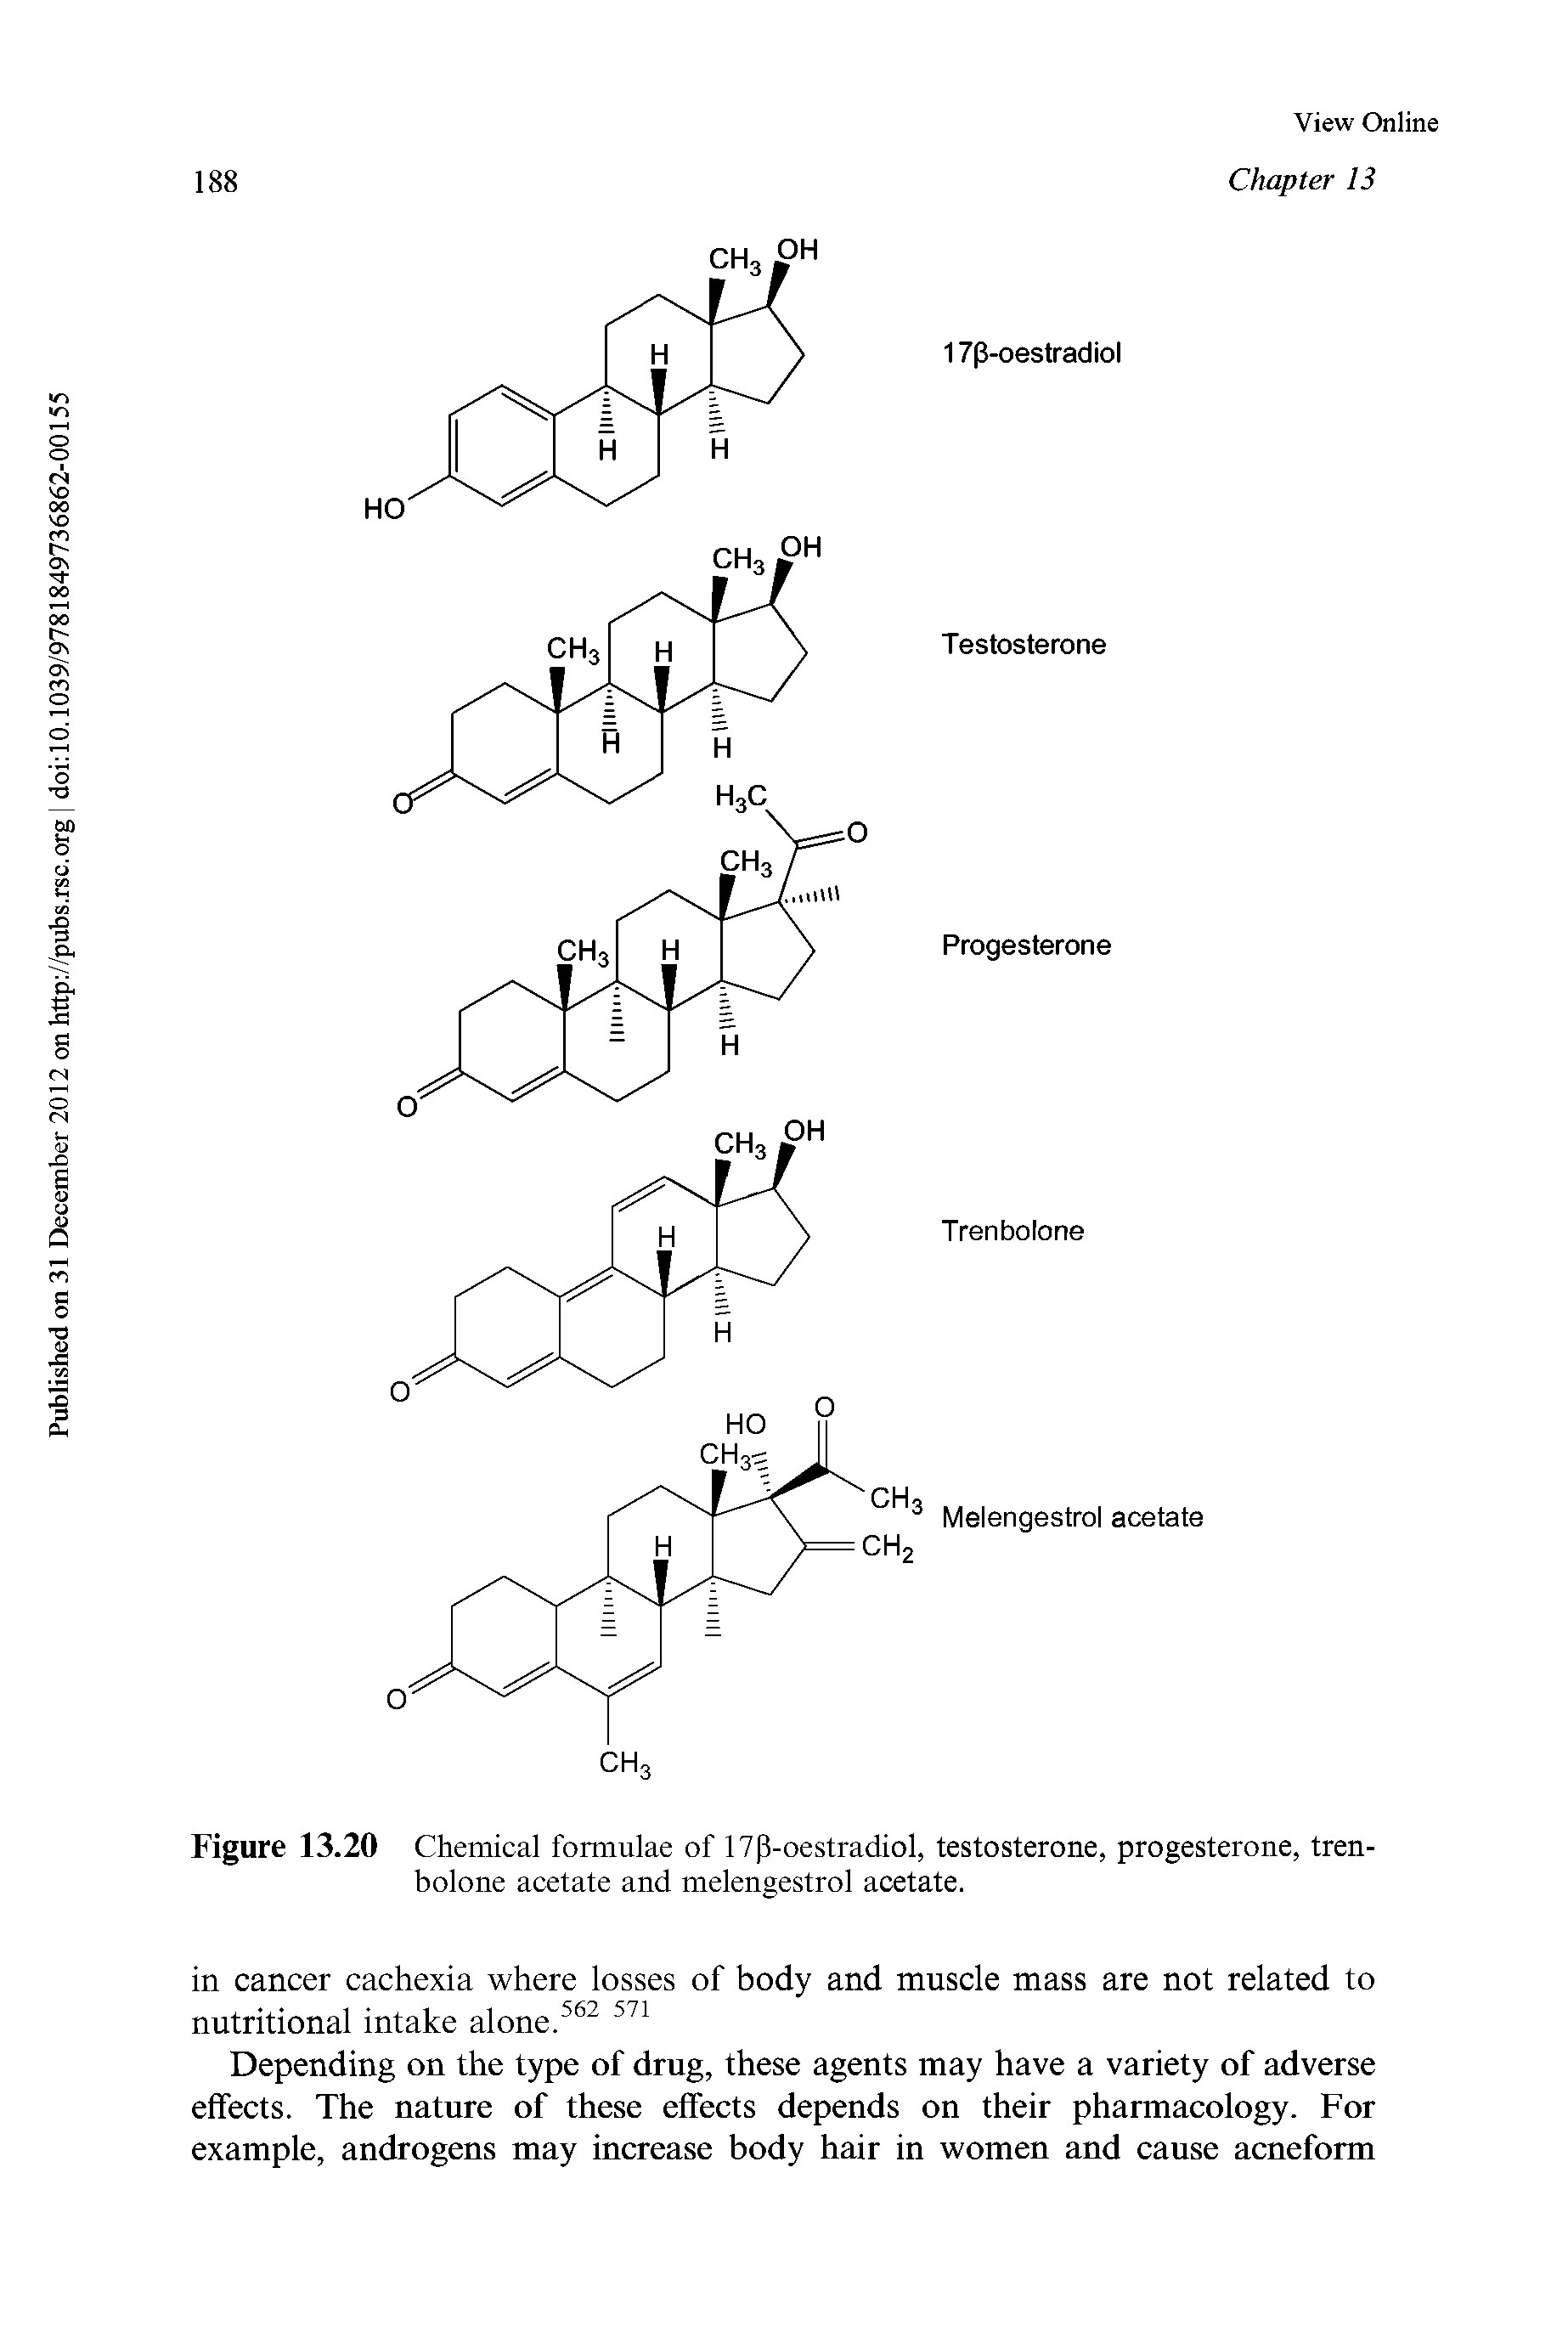 Figure 13.20 Chemical formulae of 17P-oestradiol, testosterone, progesterone, trenbolone acetate and melengestrol acetate.